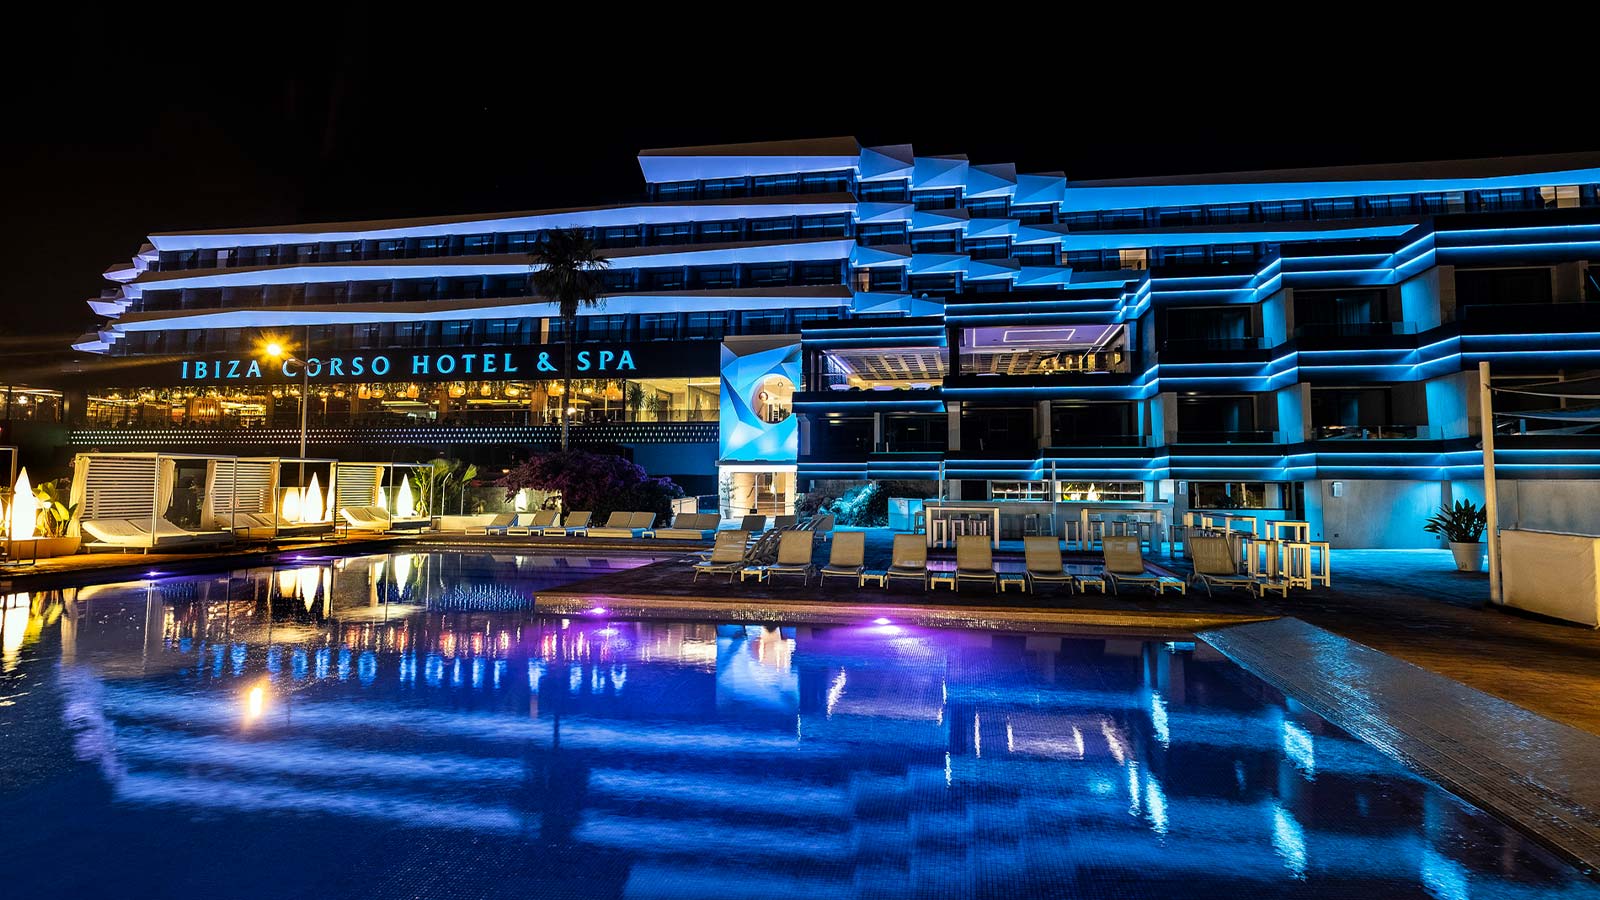 Ibiza Corso Hotel & Spa, a resort at the cutting edge of design